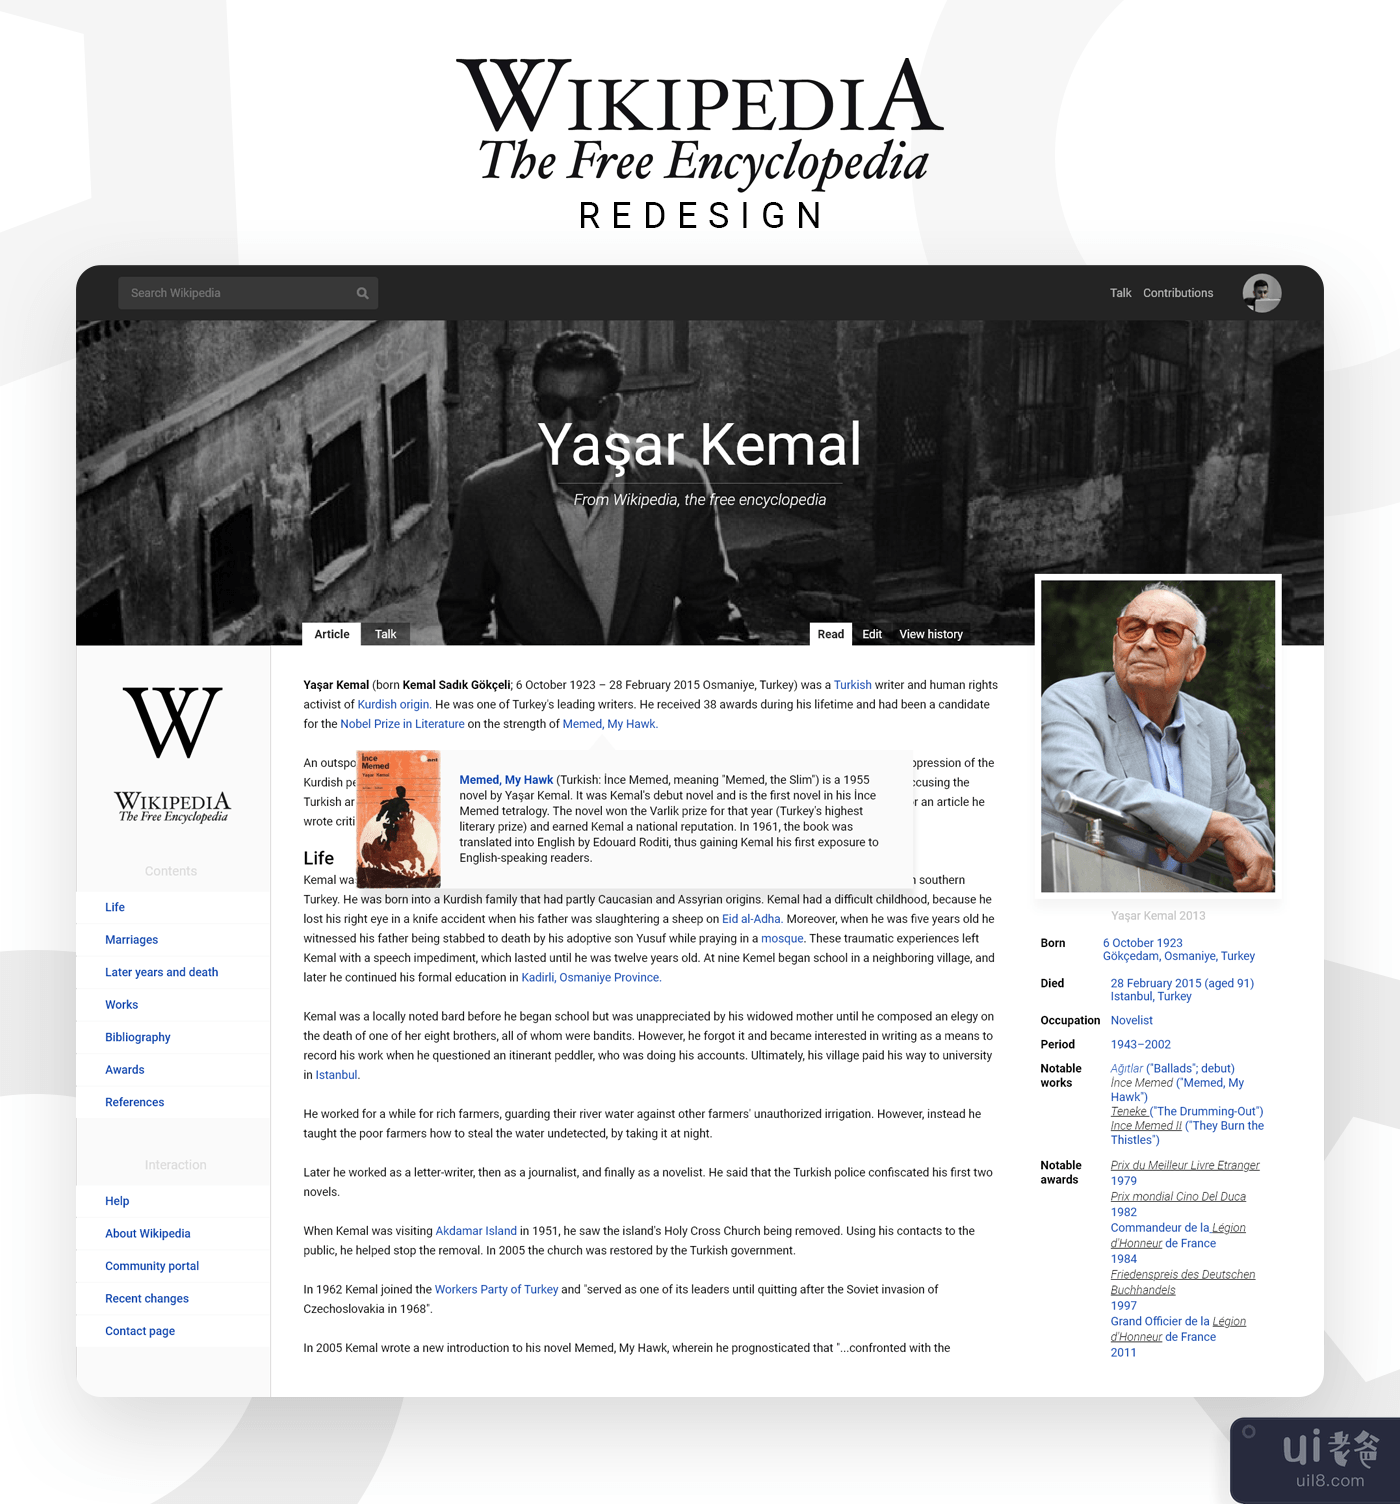 维基百科重新设计(Wikipedia Redesign)插图